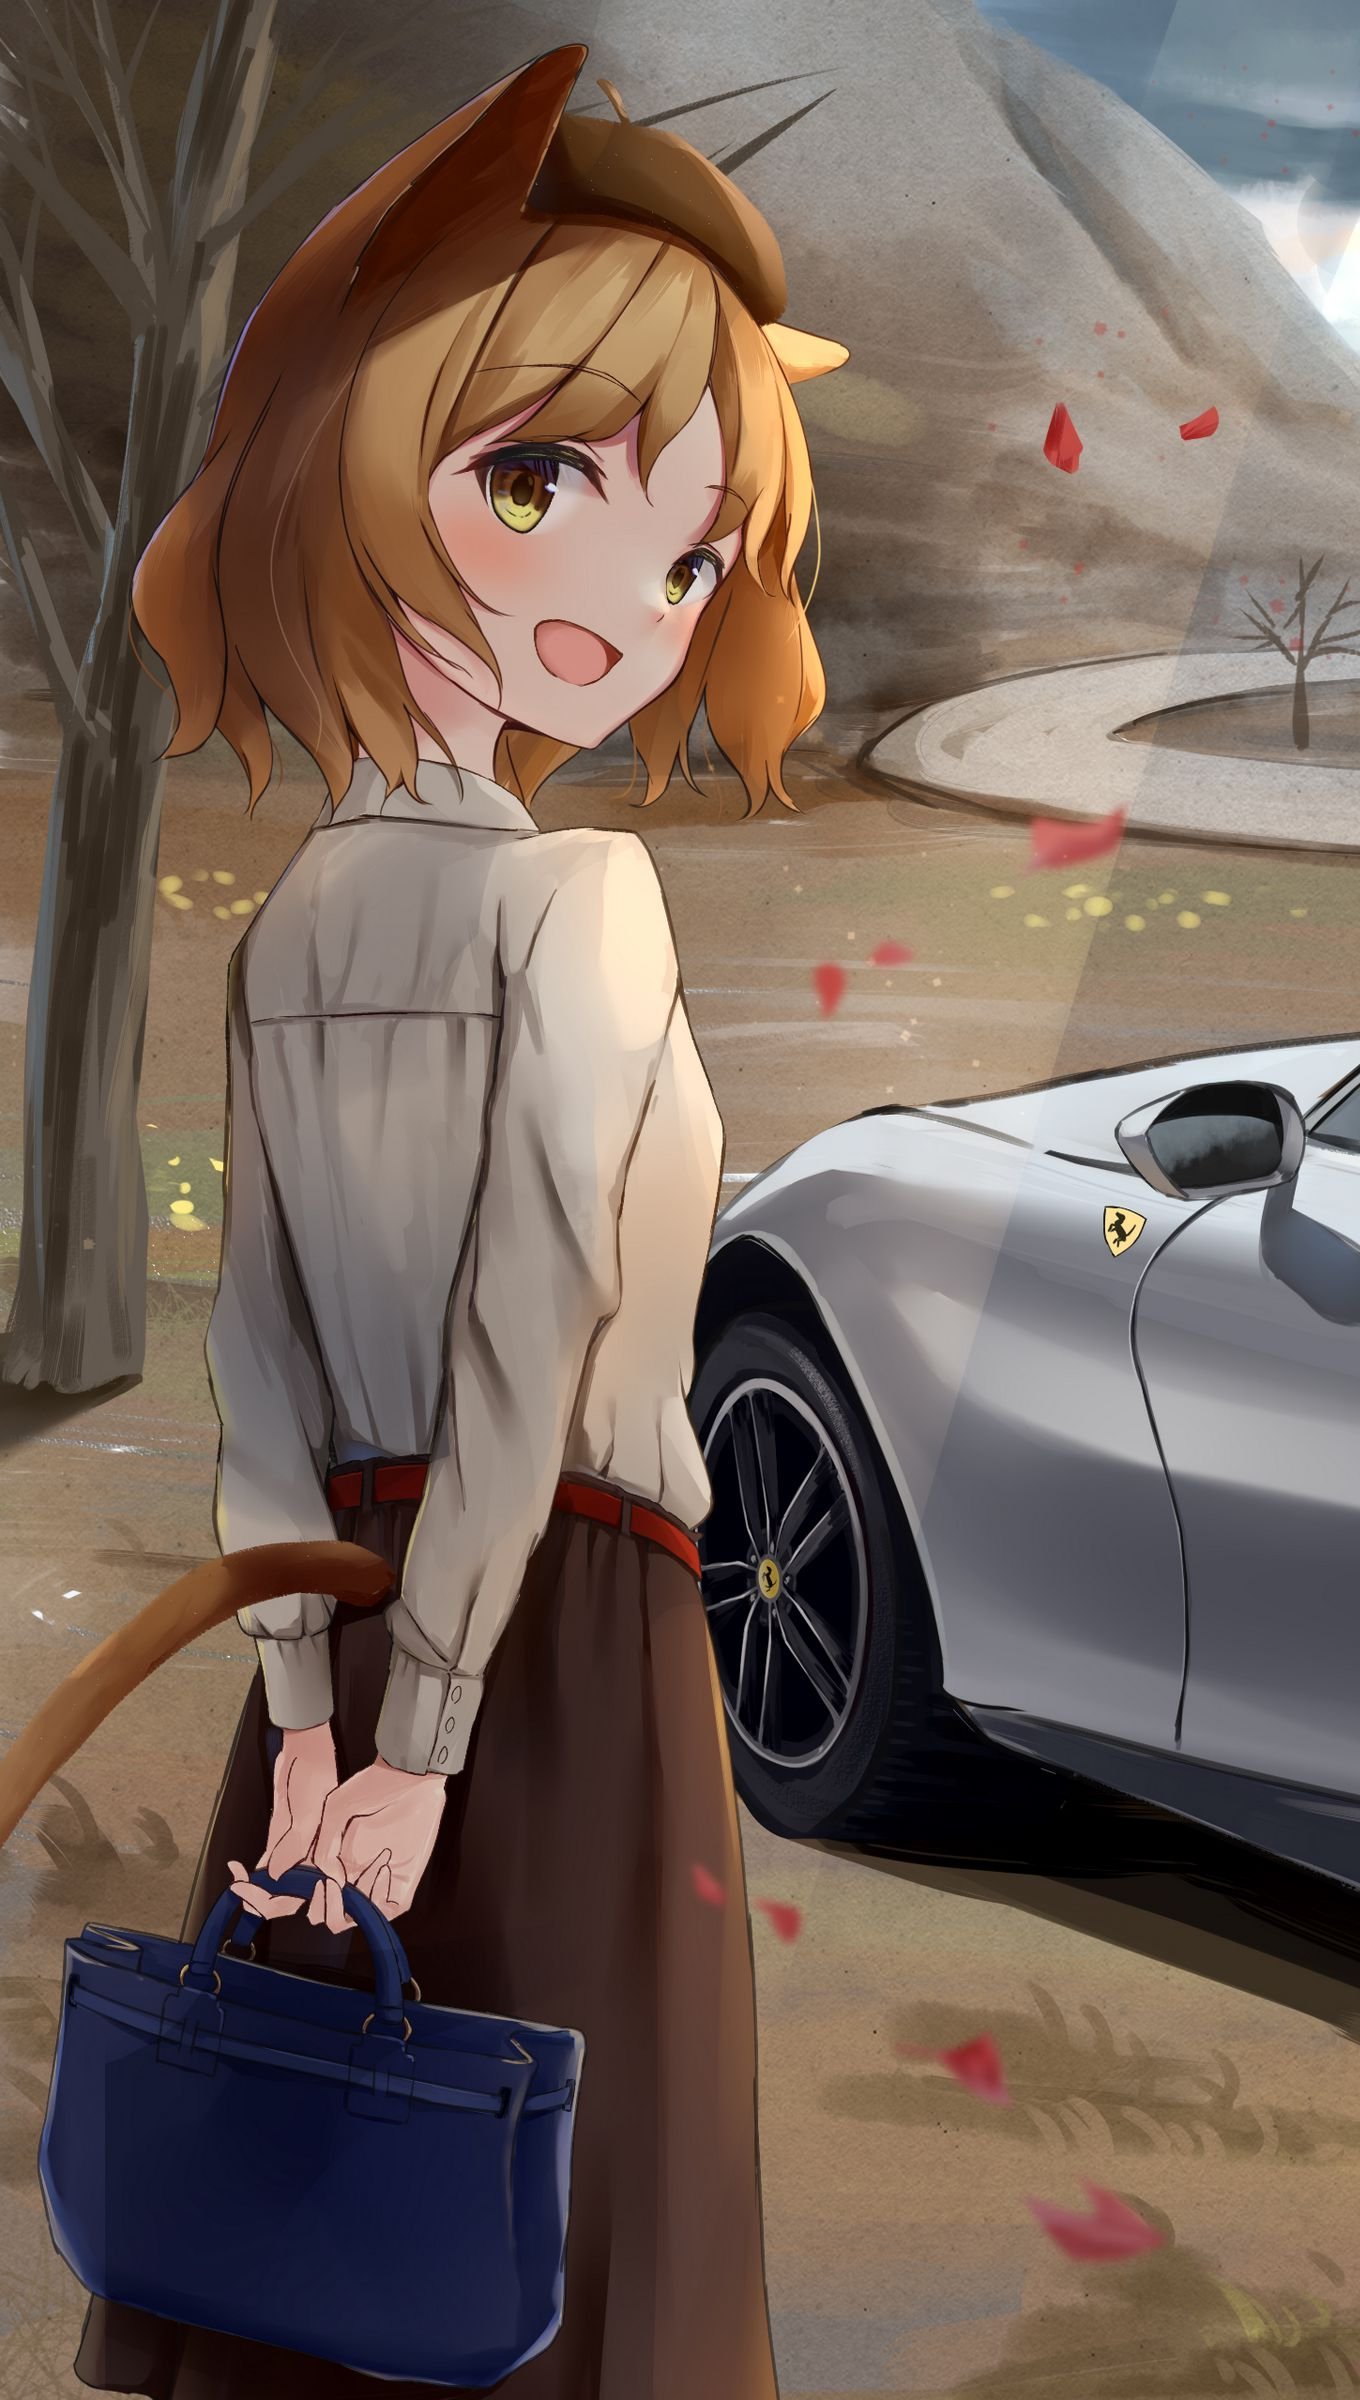 Anime Wallpaper Neko girl with car Vertical